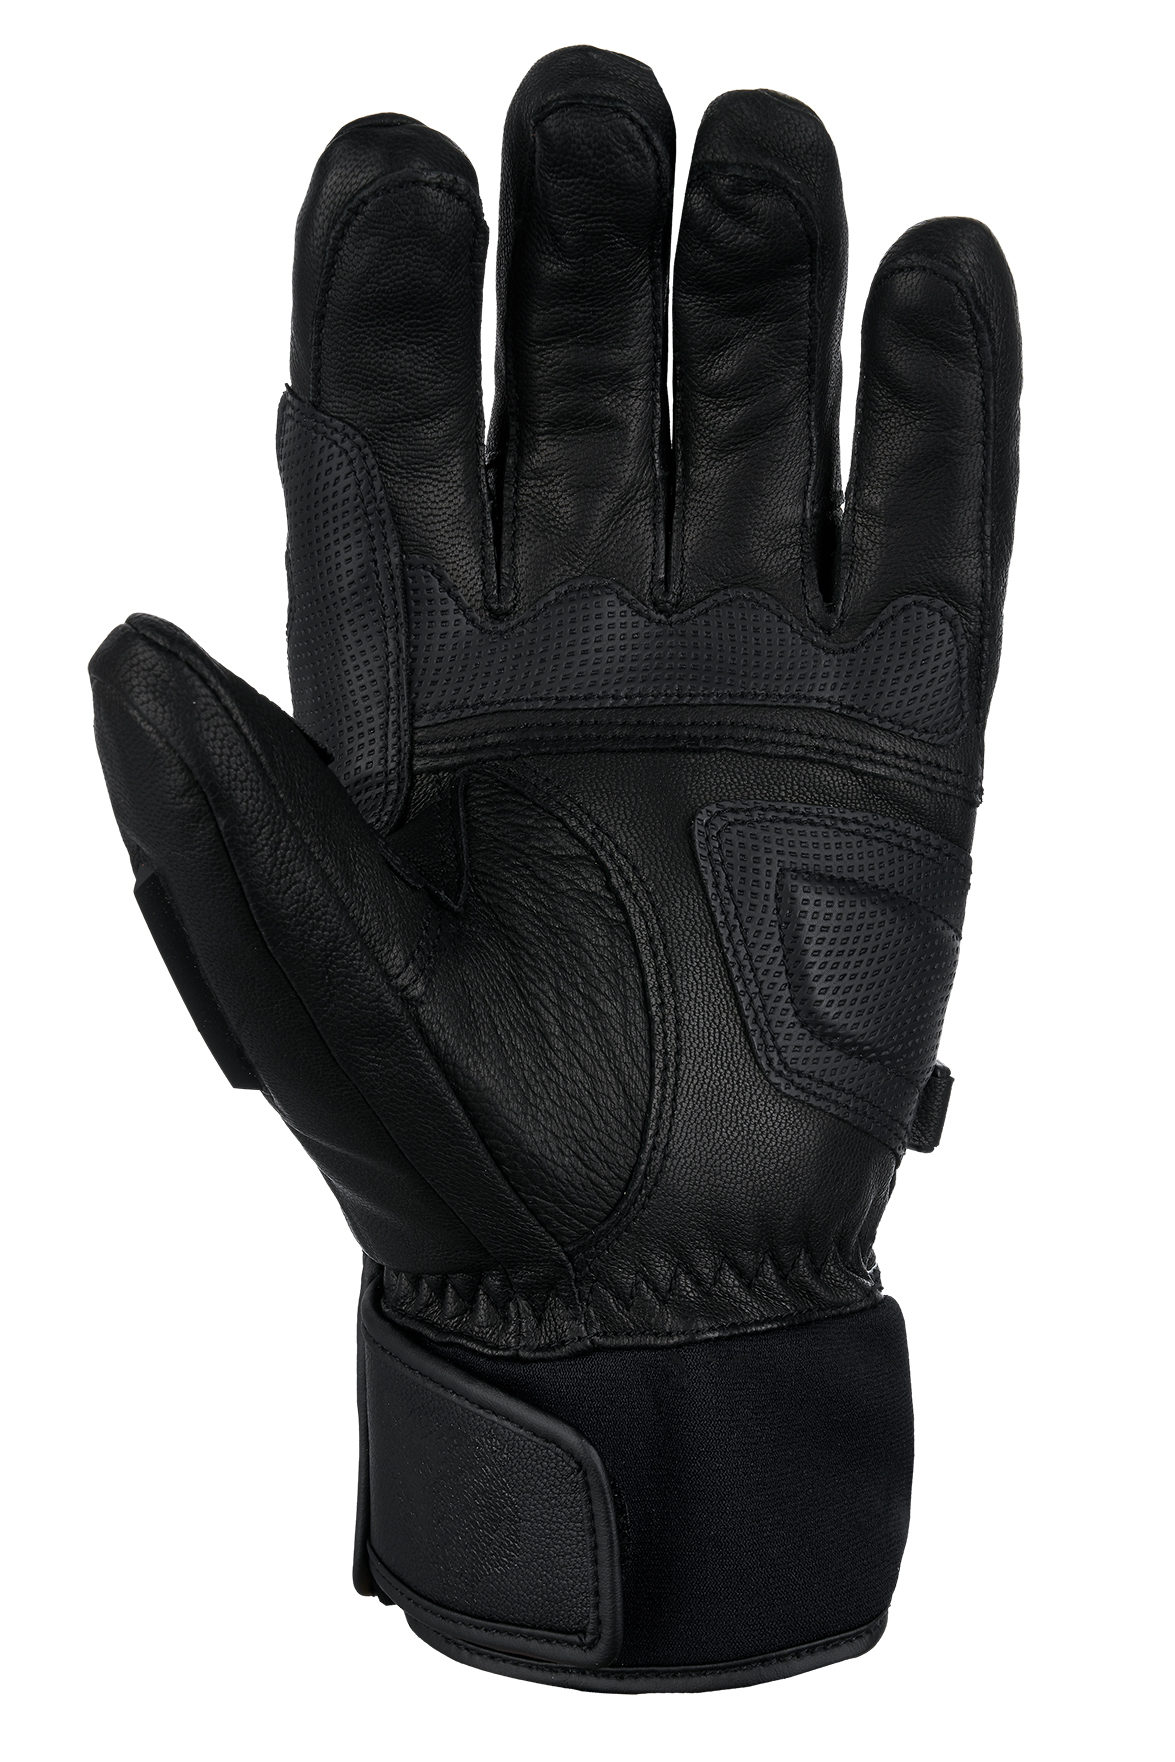 Перчатки Terror 21-22 Race Gloves Black, цвет черный, размер L 00050120 - фото 2